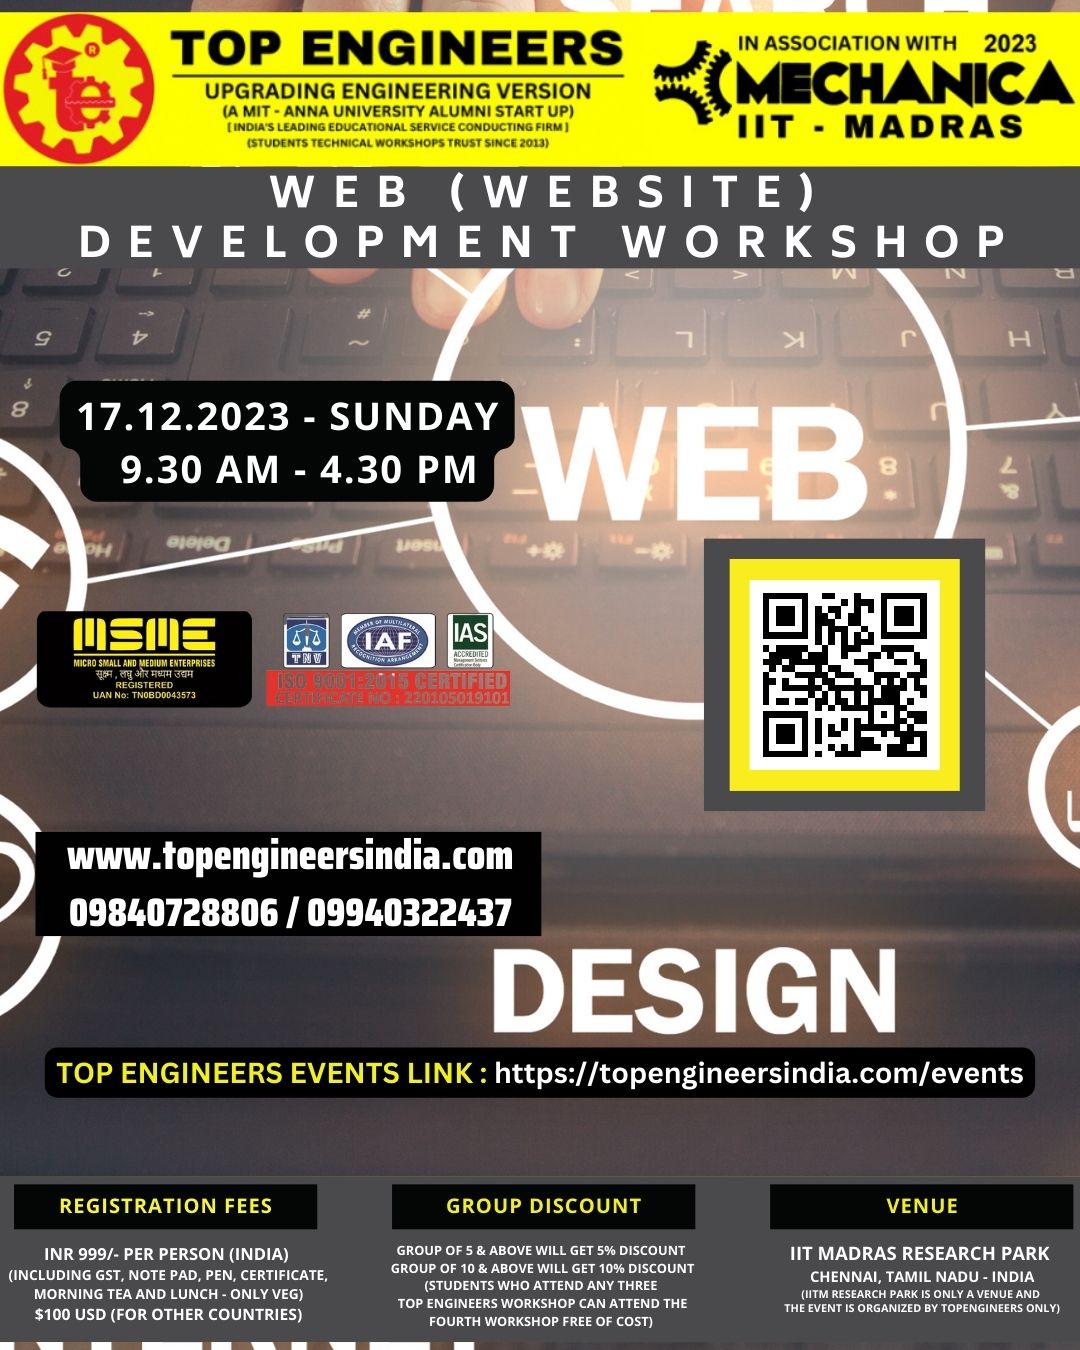 Web (website) Development Workshop 2023